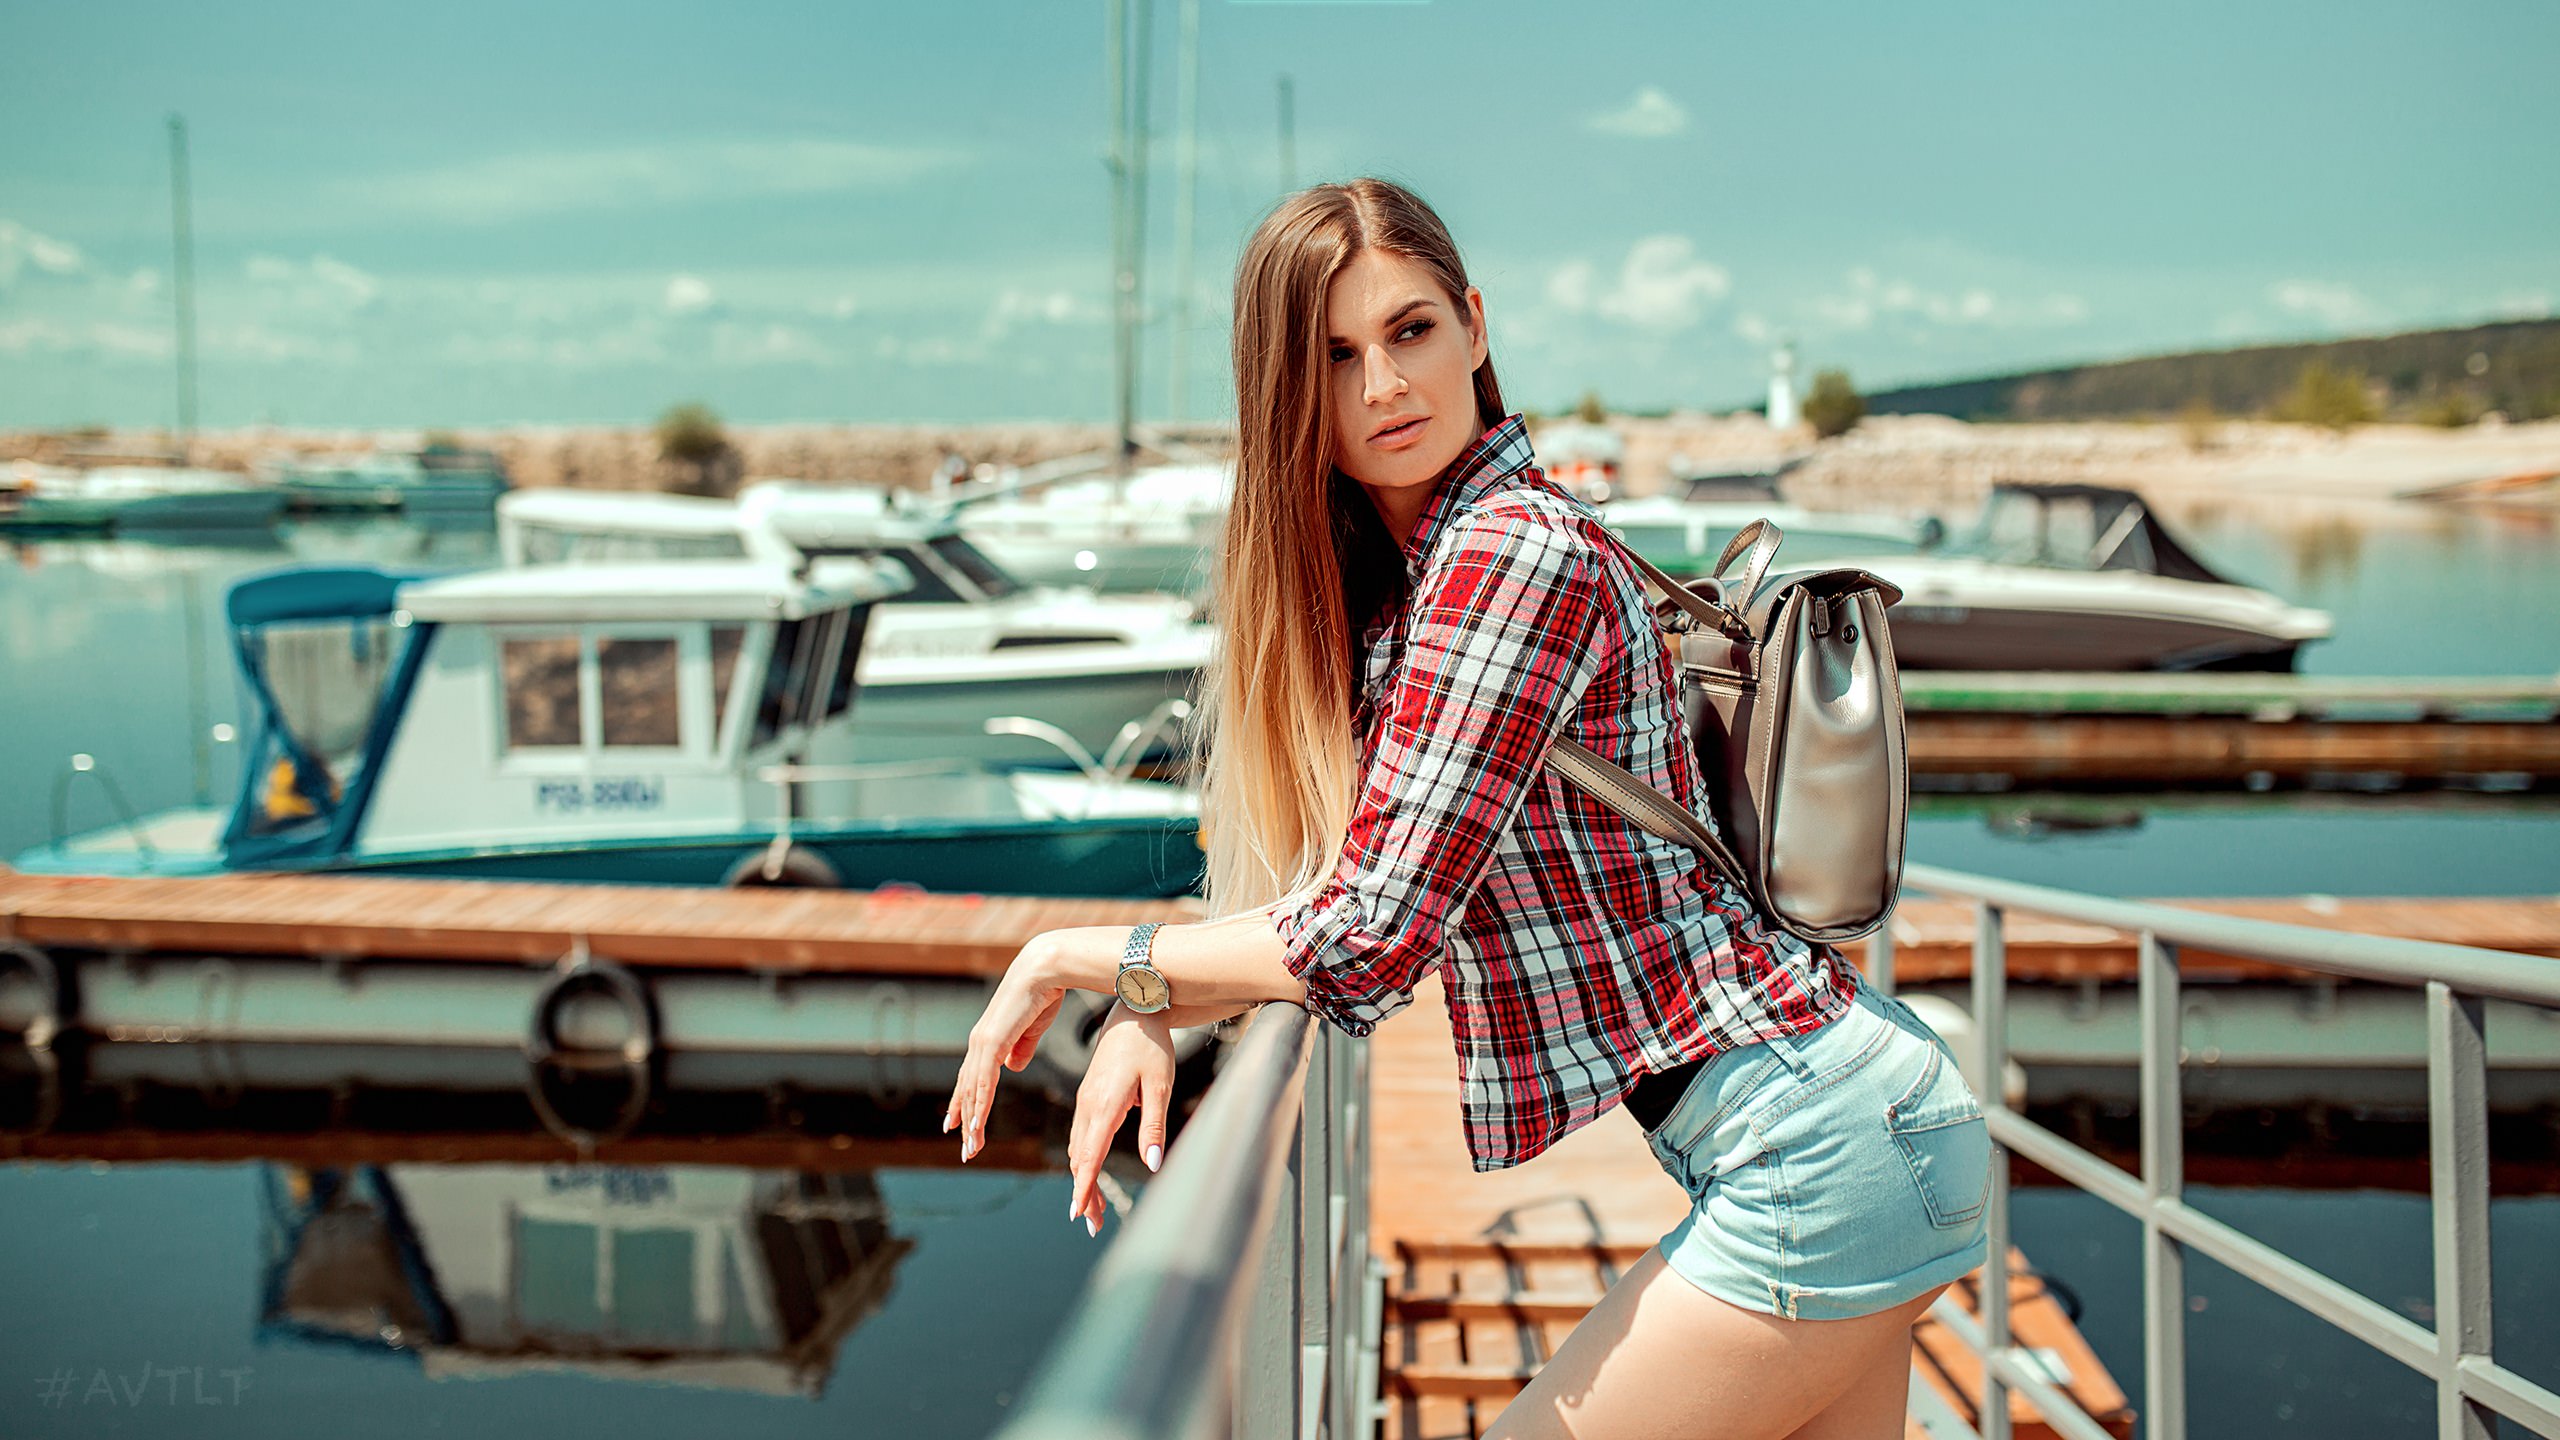 Women Blonde Plaid Shirt Boat Pier Handbags Women Outdoors Long Hair Aleksandr Suhar Backpacks Ombre 2560x1440